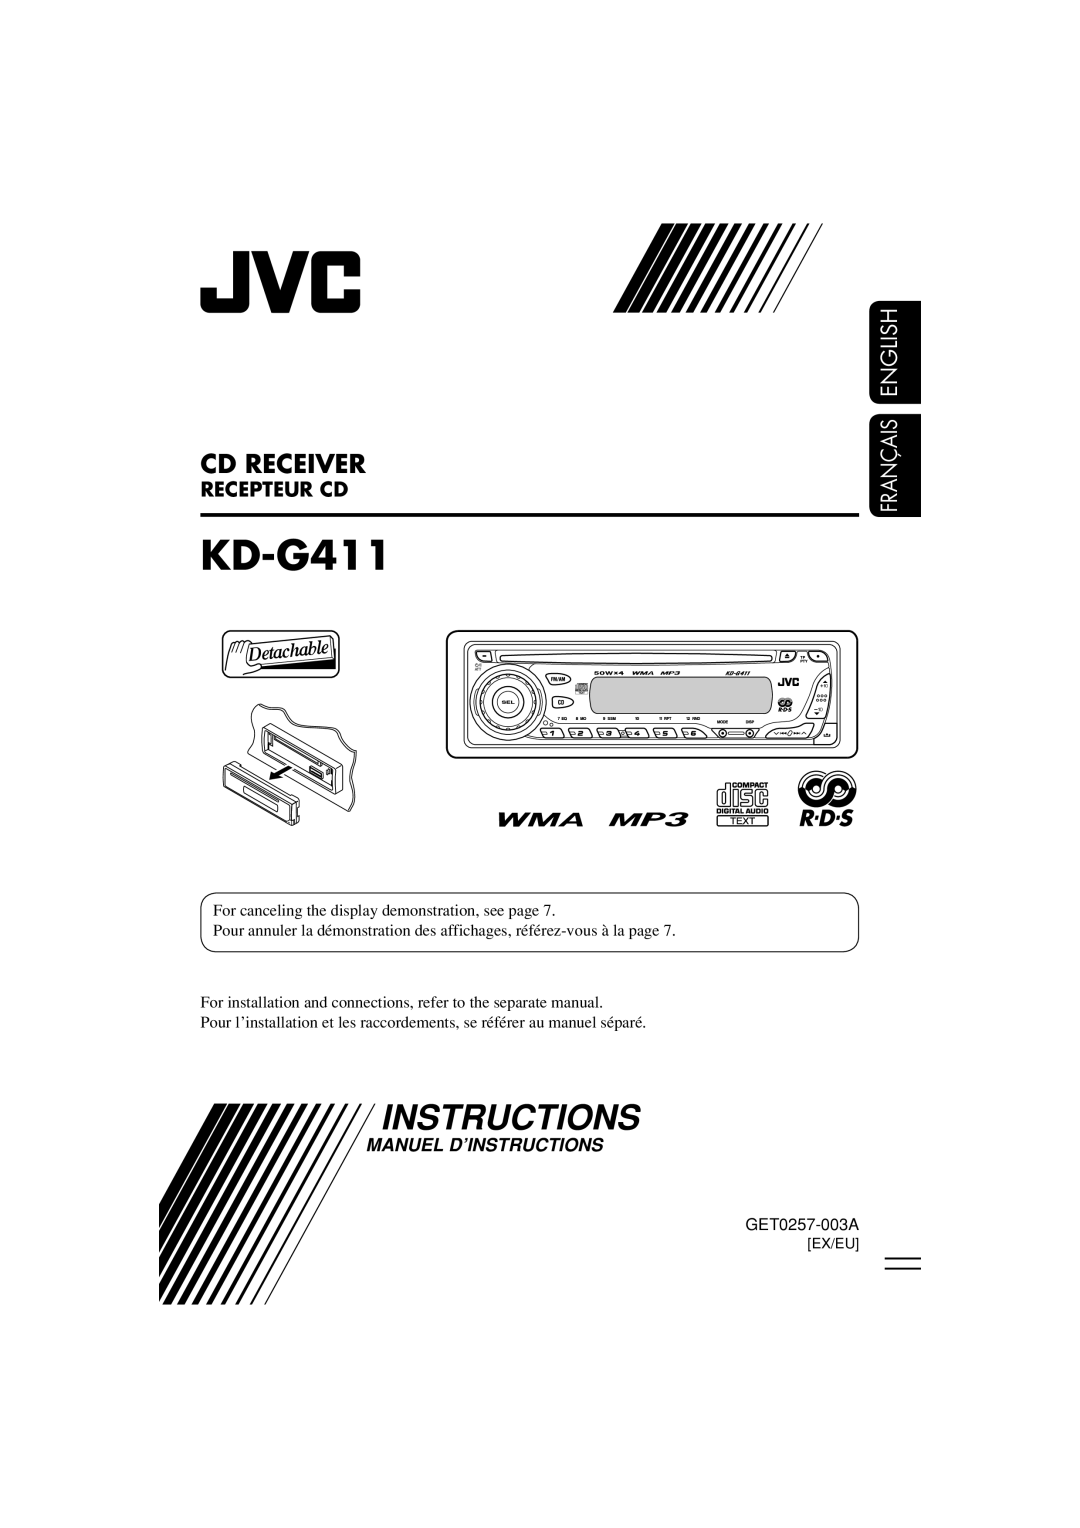 JVC KD-G411 manual Cd Receiver, Recepteur Cd, Manuel D’Instructions, Français English 